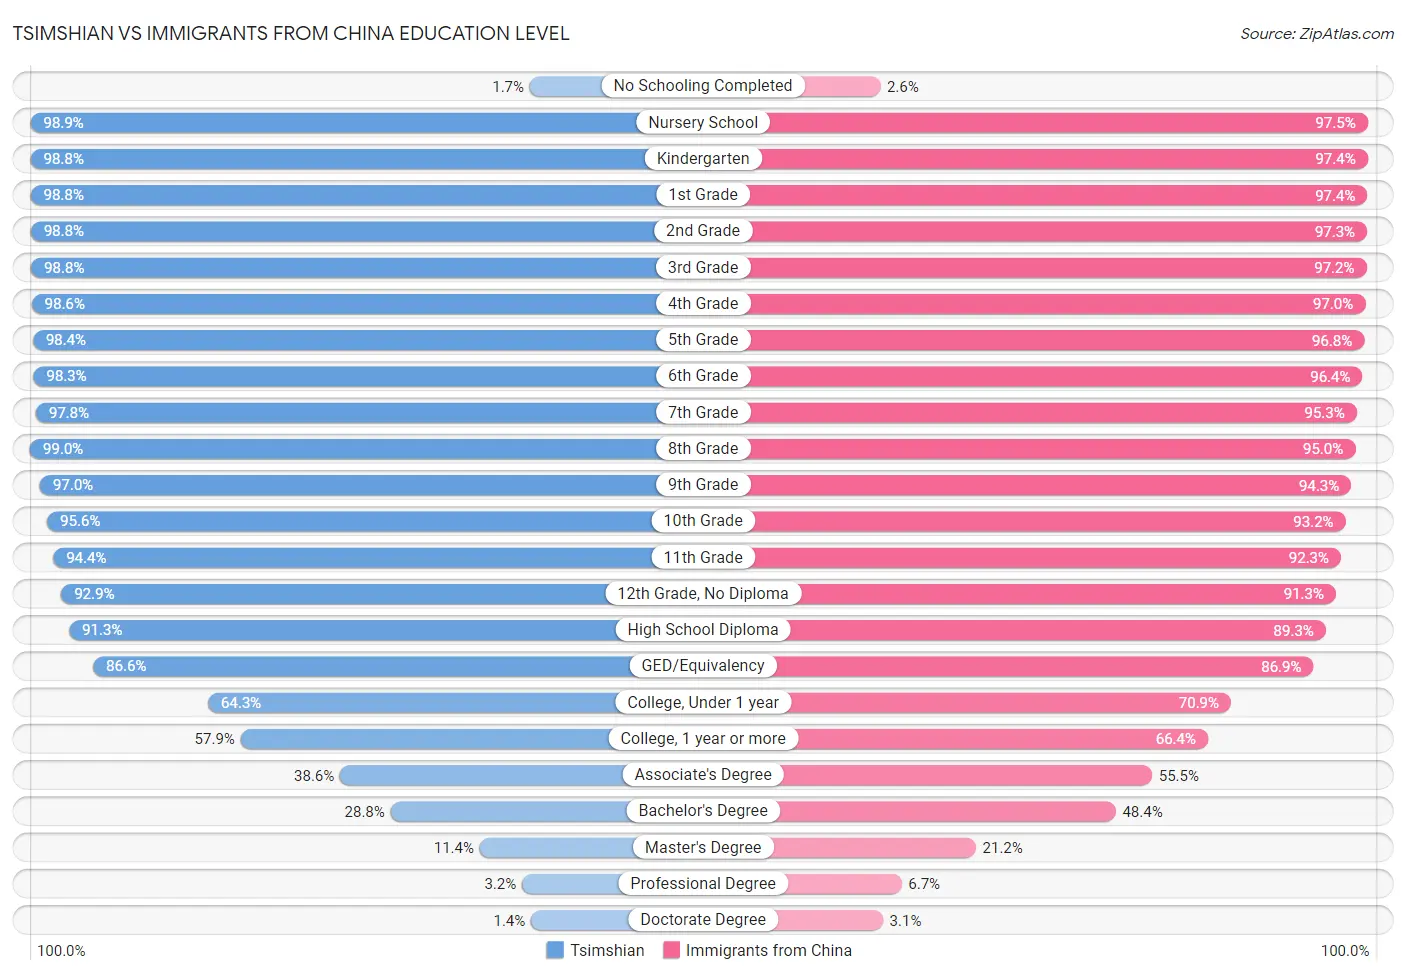 Tsimshian vs Immigrants from China Education Level